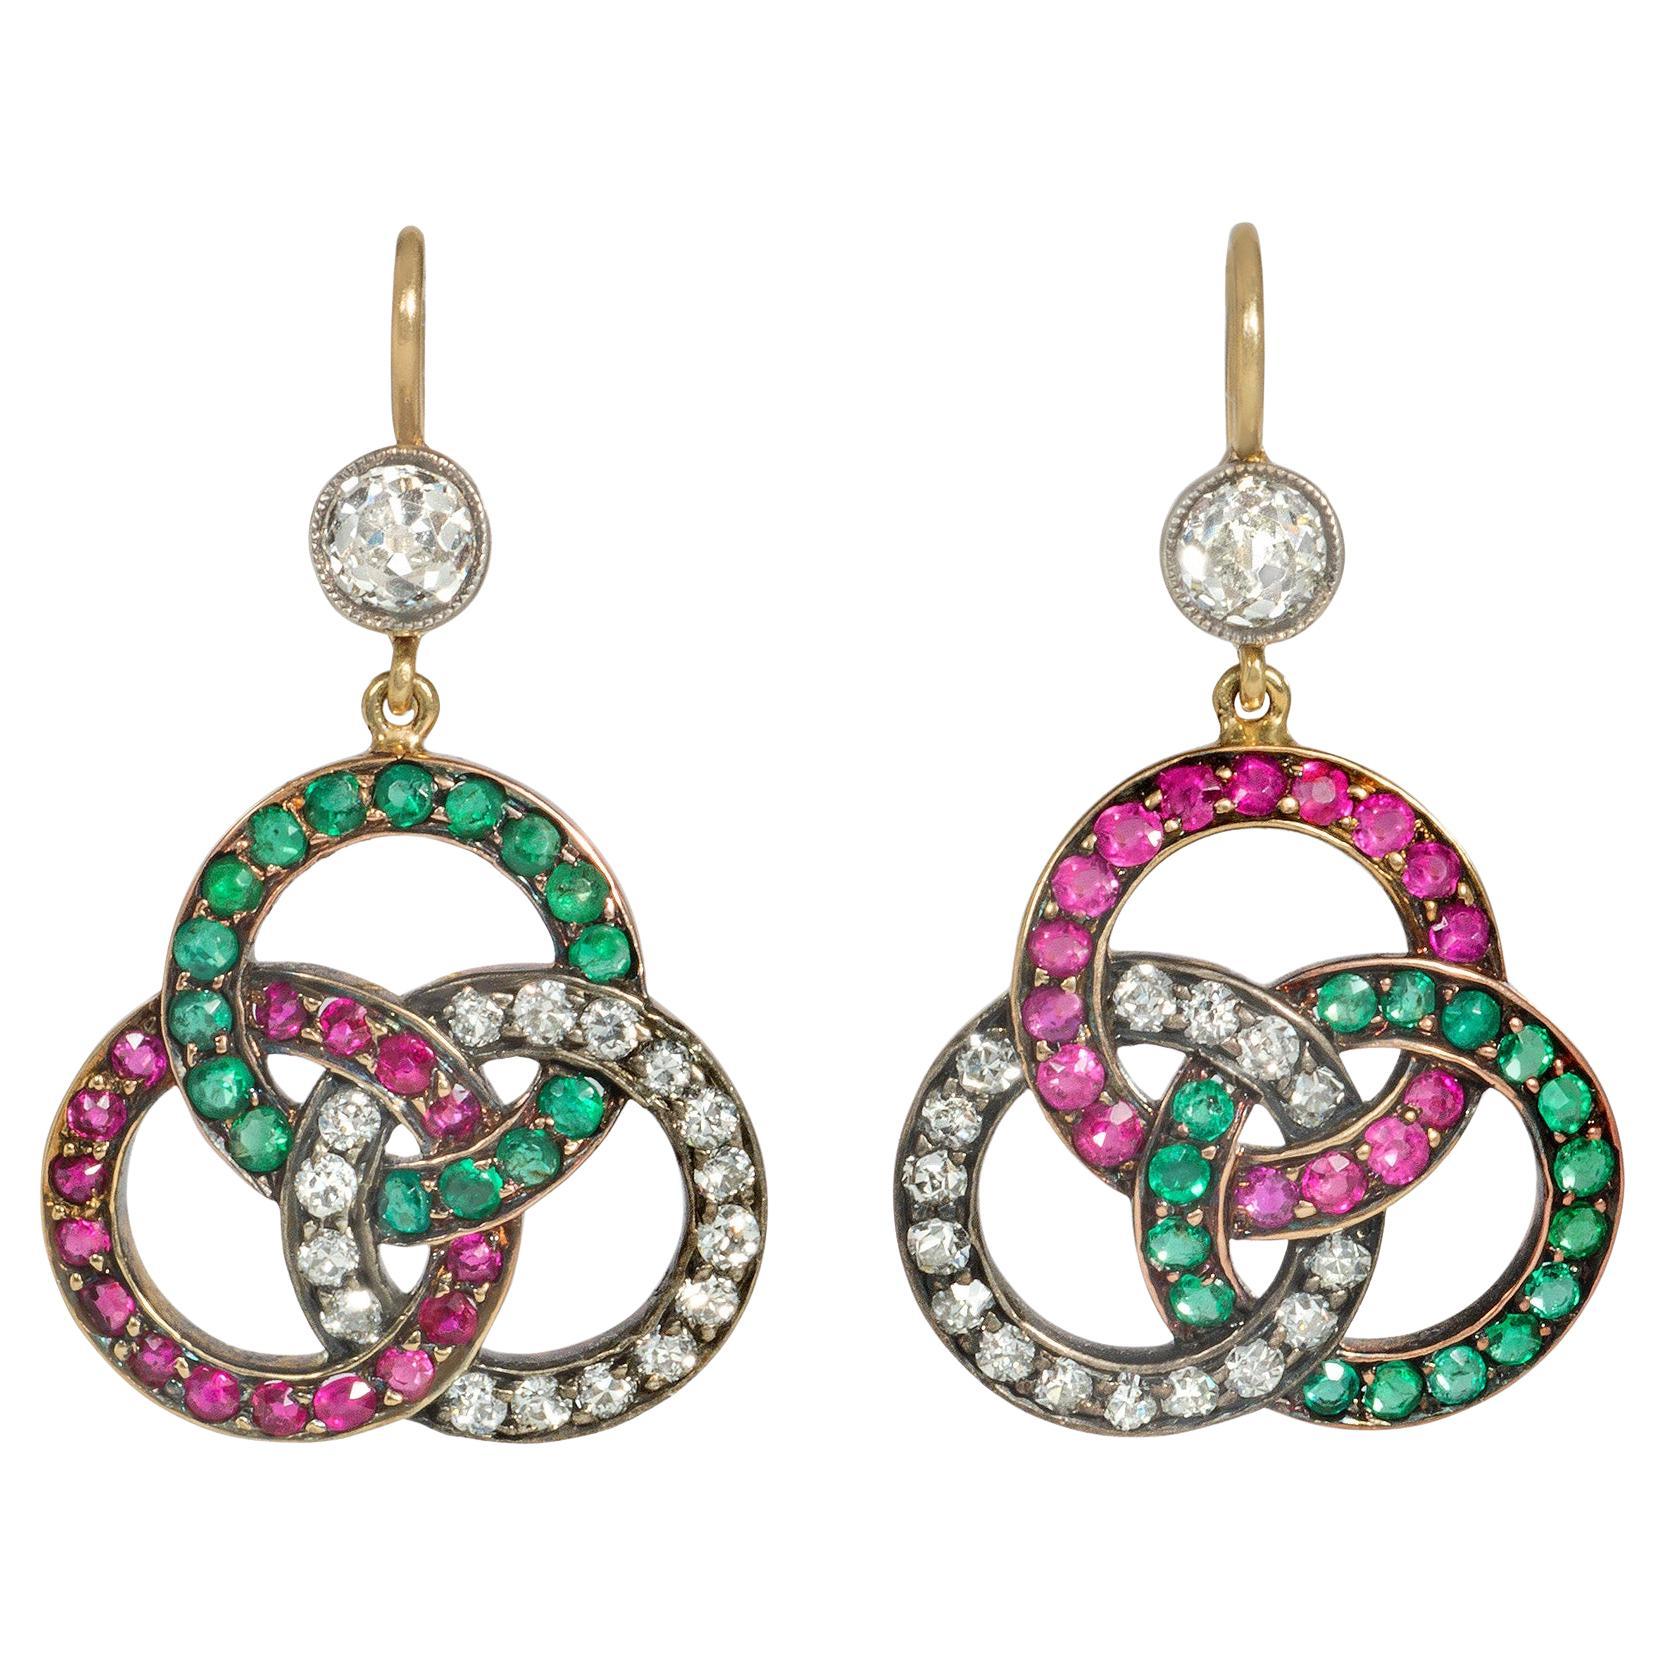 Antique Emerald, Ruby, and Diamond Pendant Earrings of Open Trefoil Design